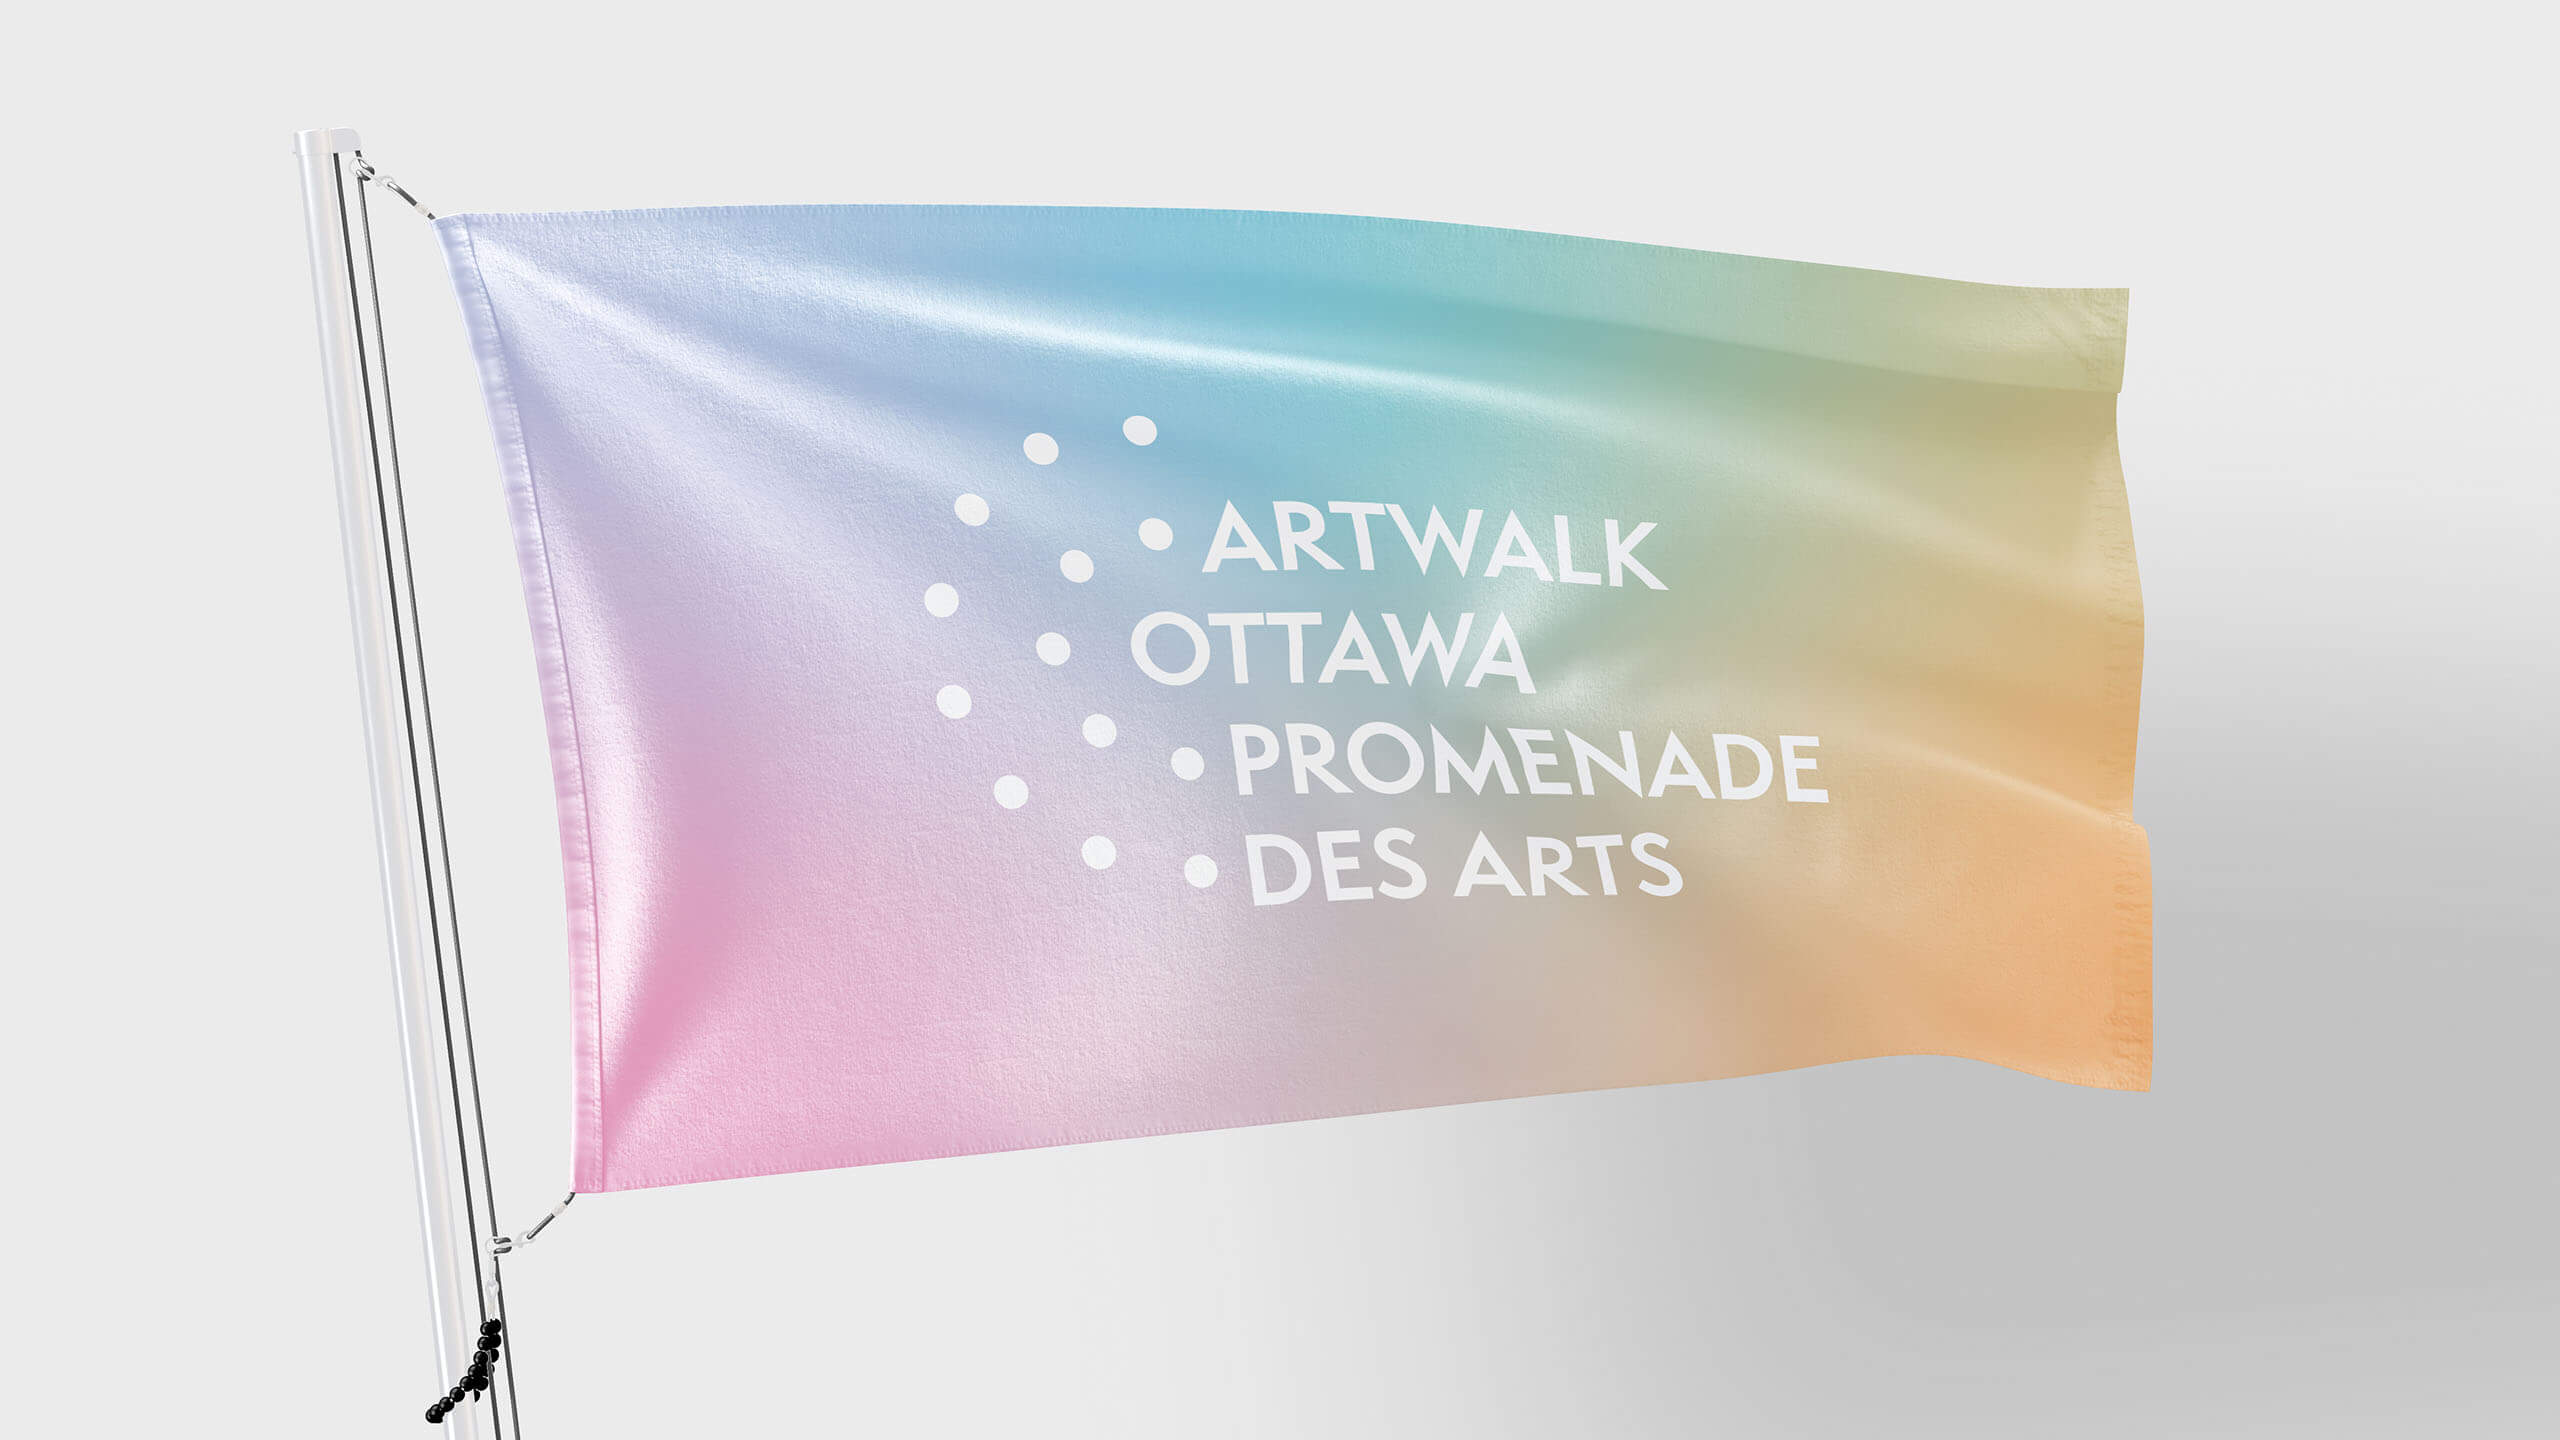 Artwalk Ottawa Promenade des Arts flag by The Coopers